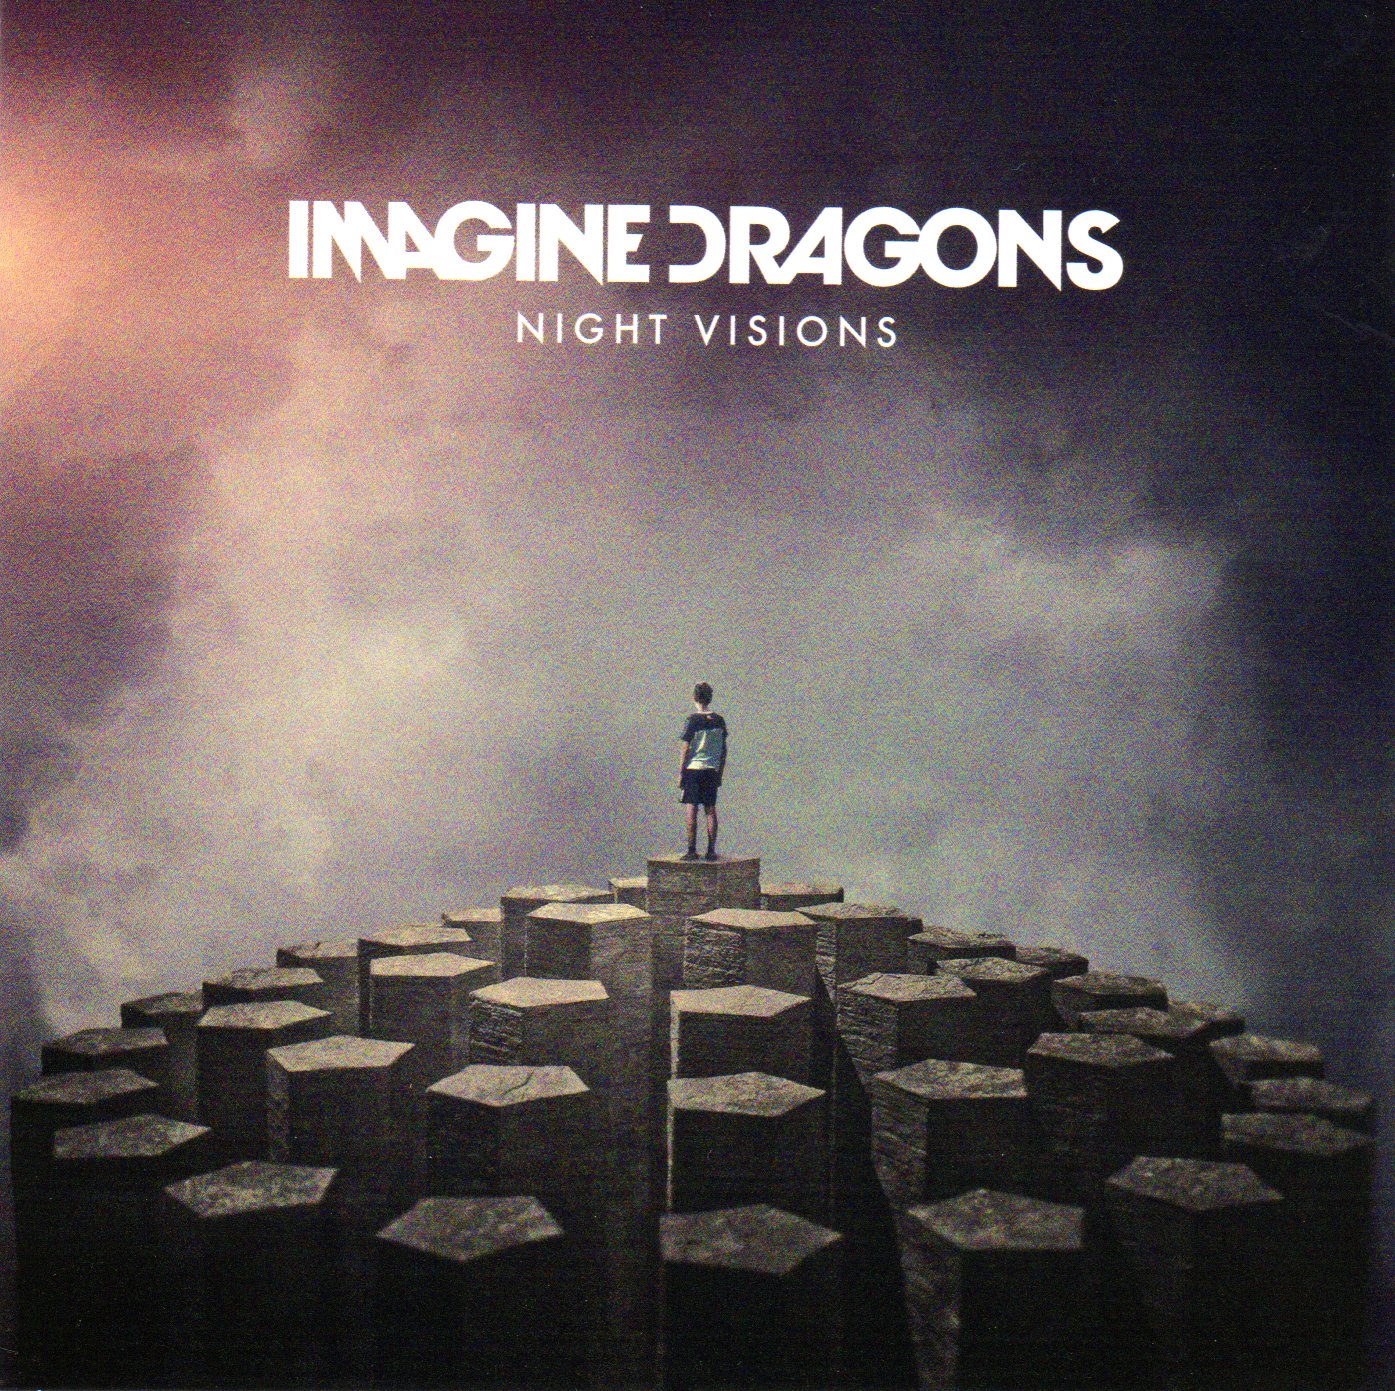 radioactive imagine dragons album cover